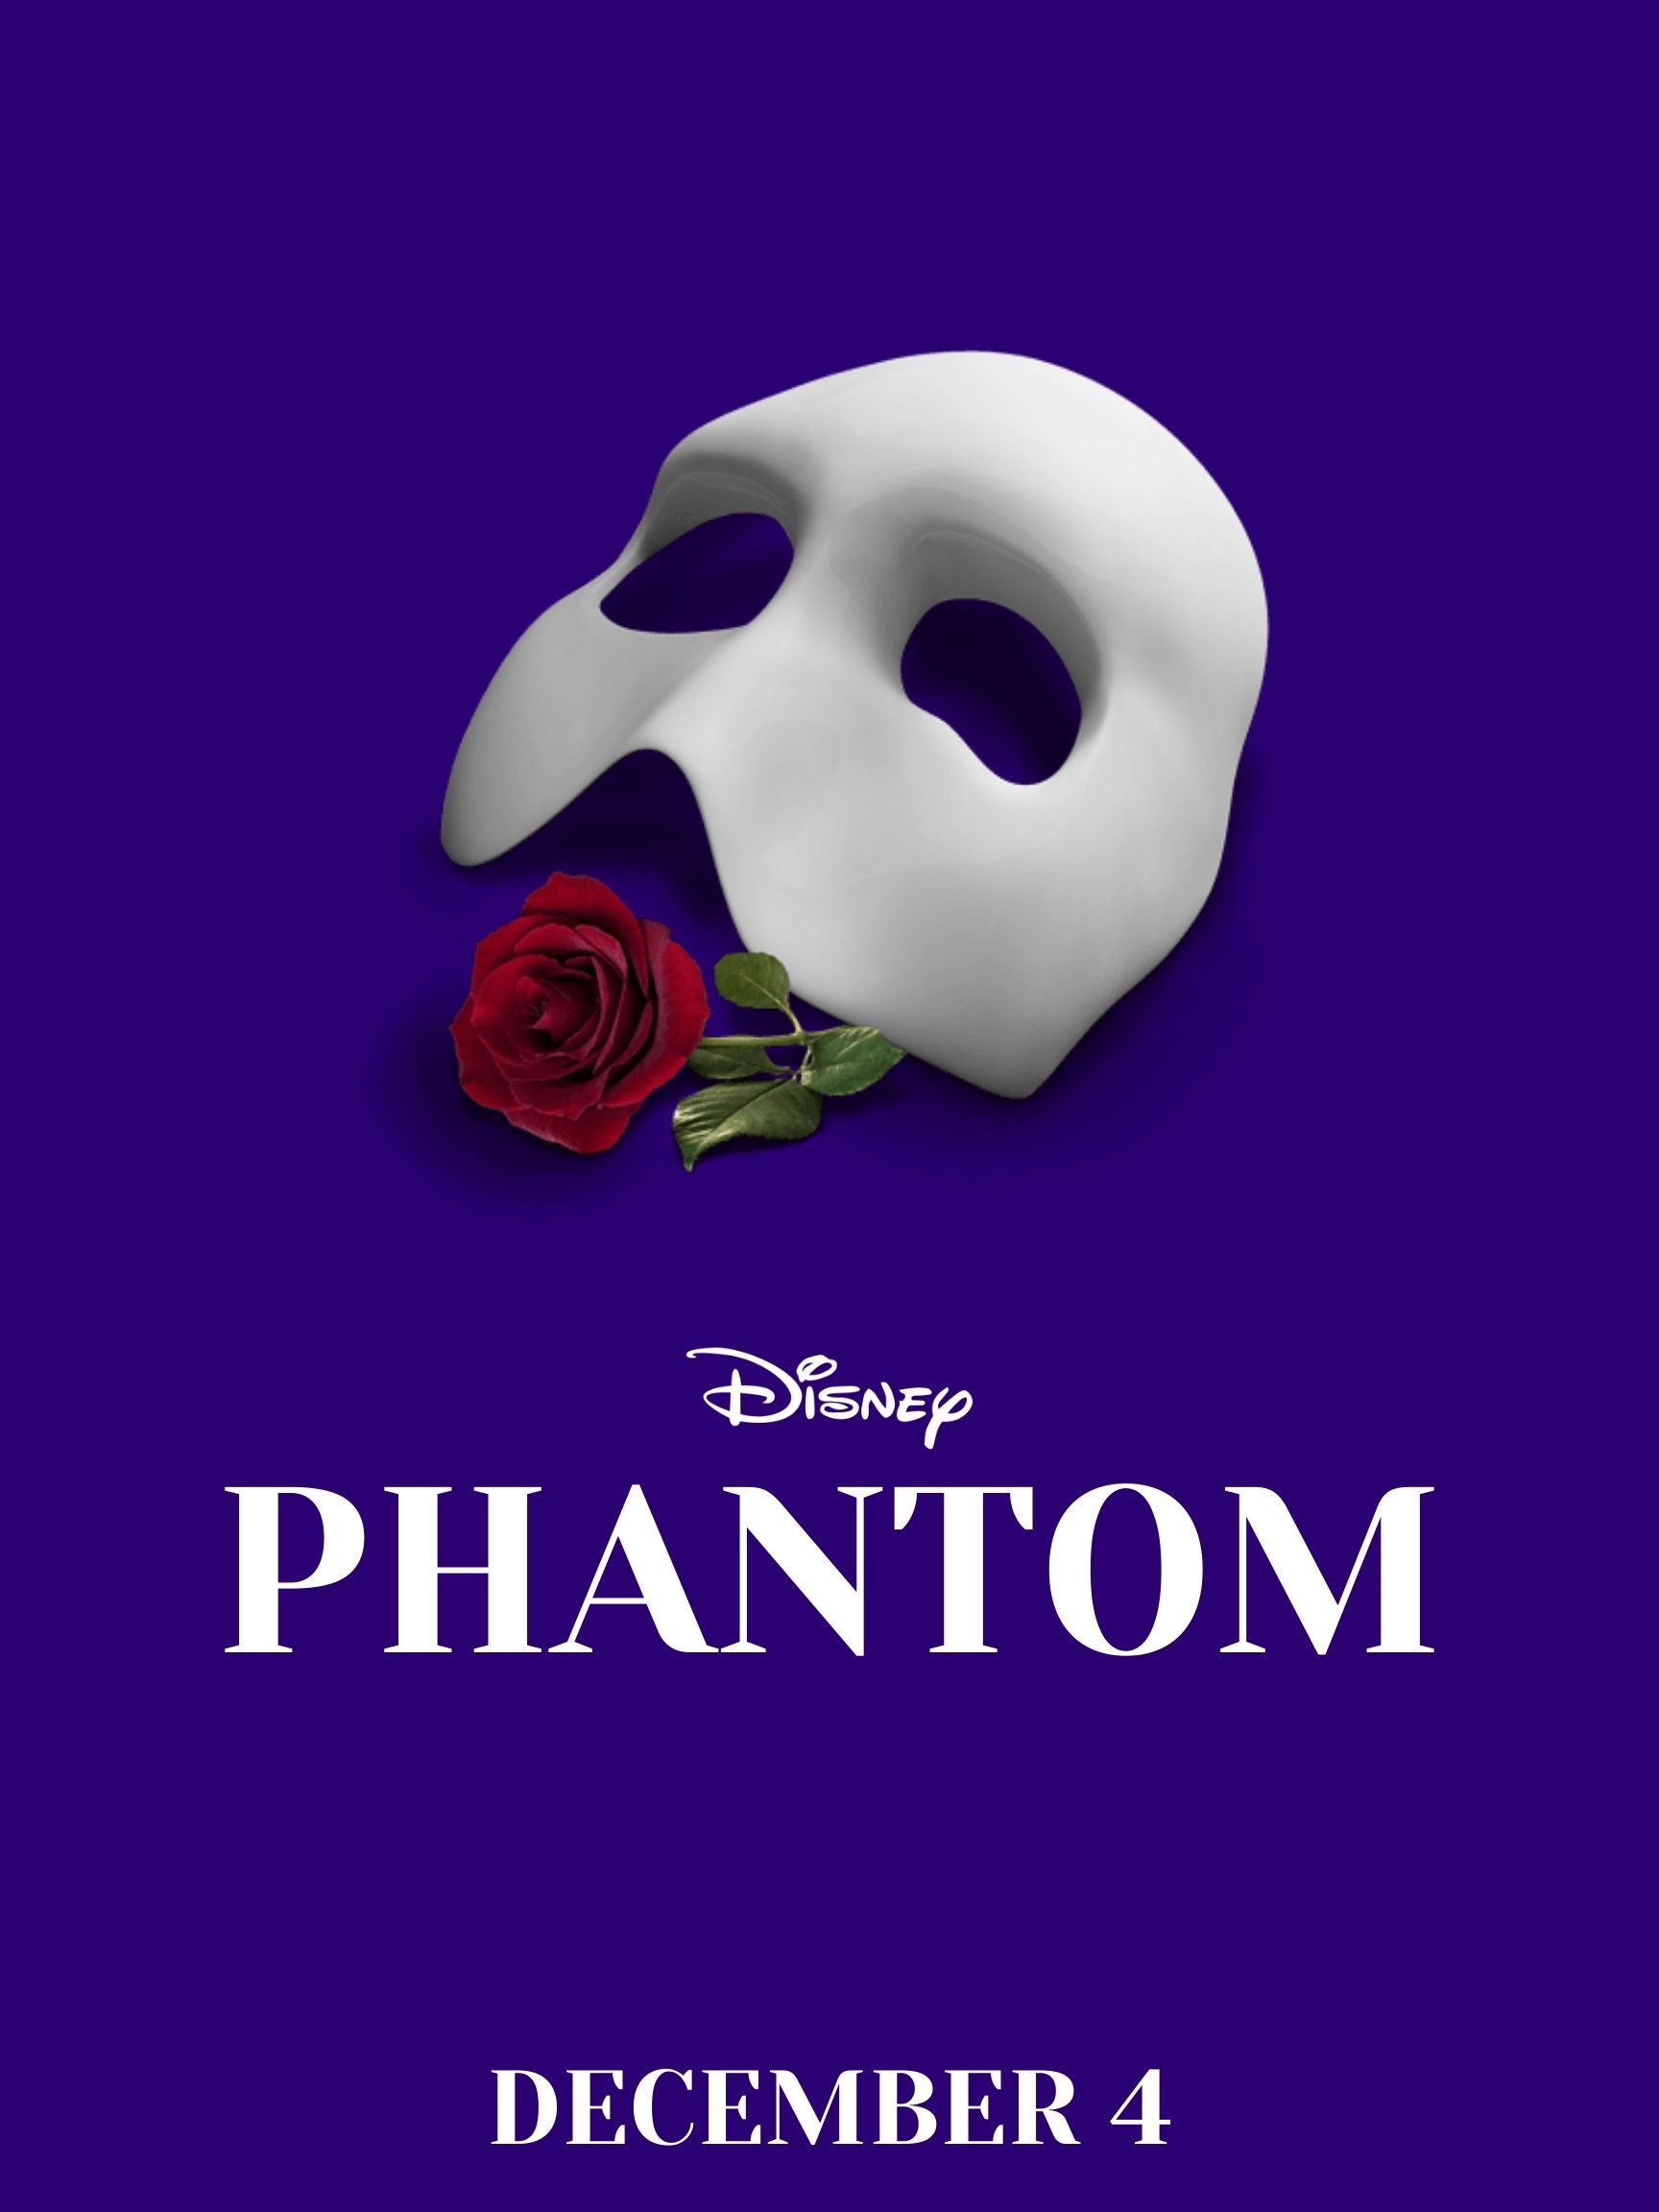 phantom of the opera musical poster